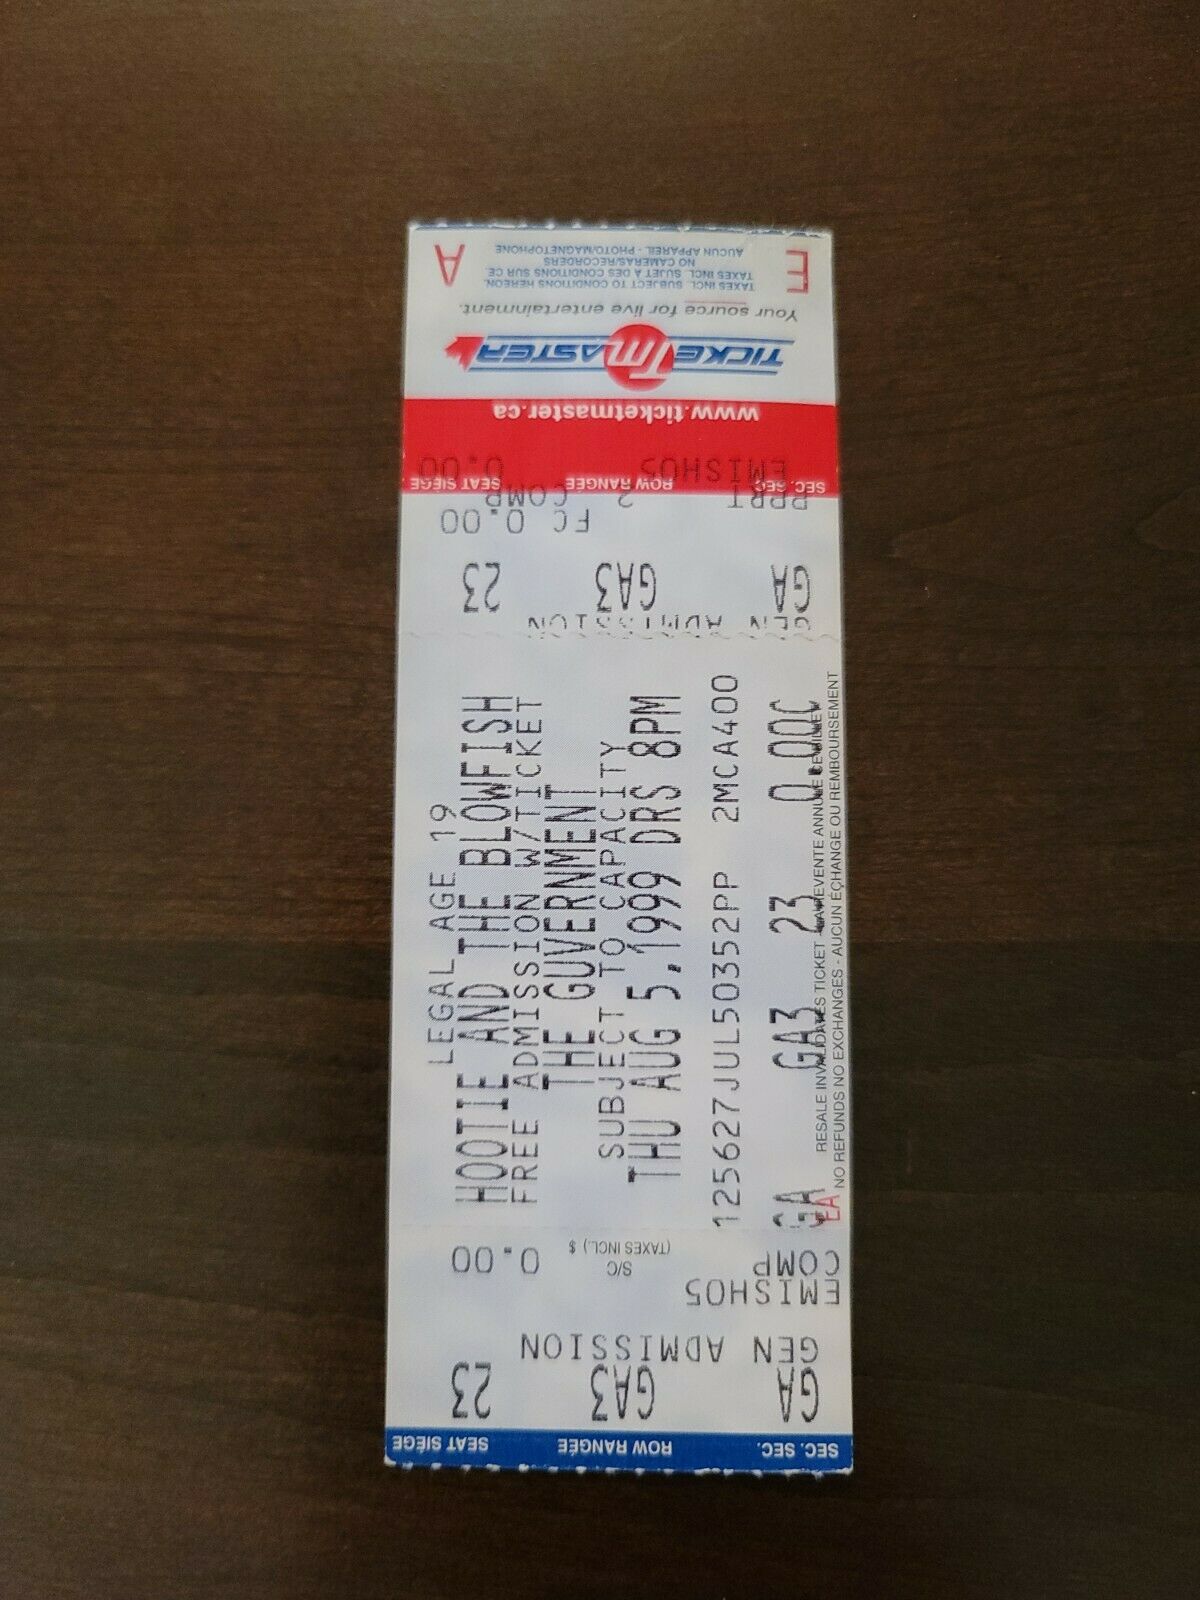 Hootie And Blowfish 1999, Toronto The Guvernment Original Concert Ticket Stub